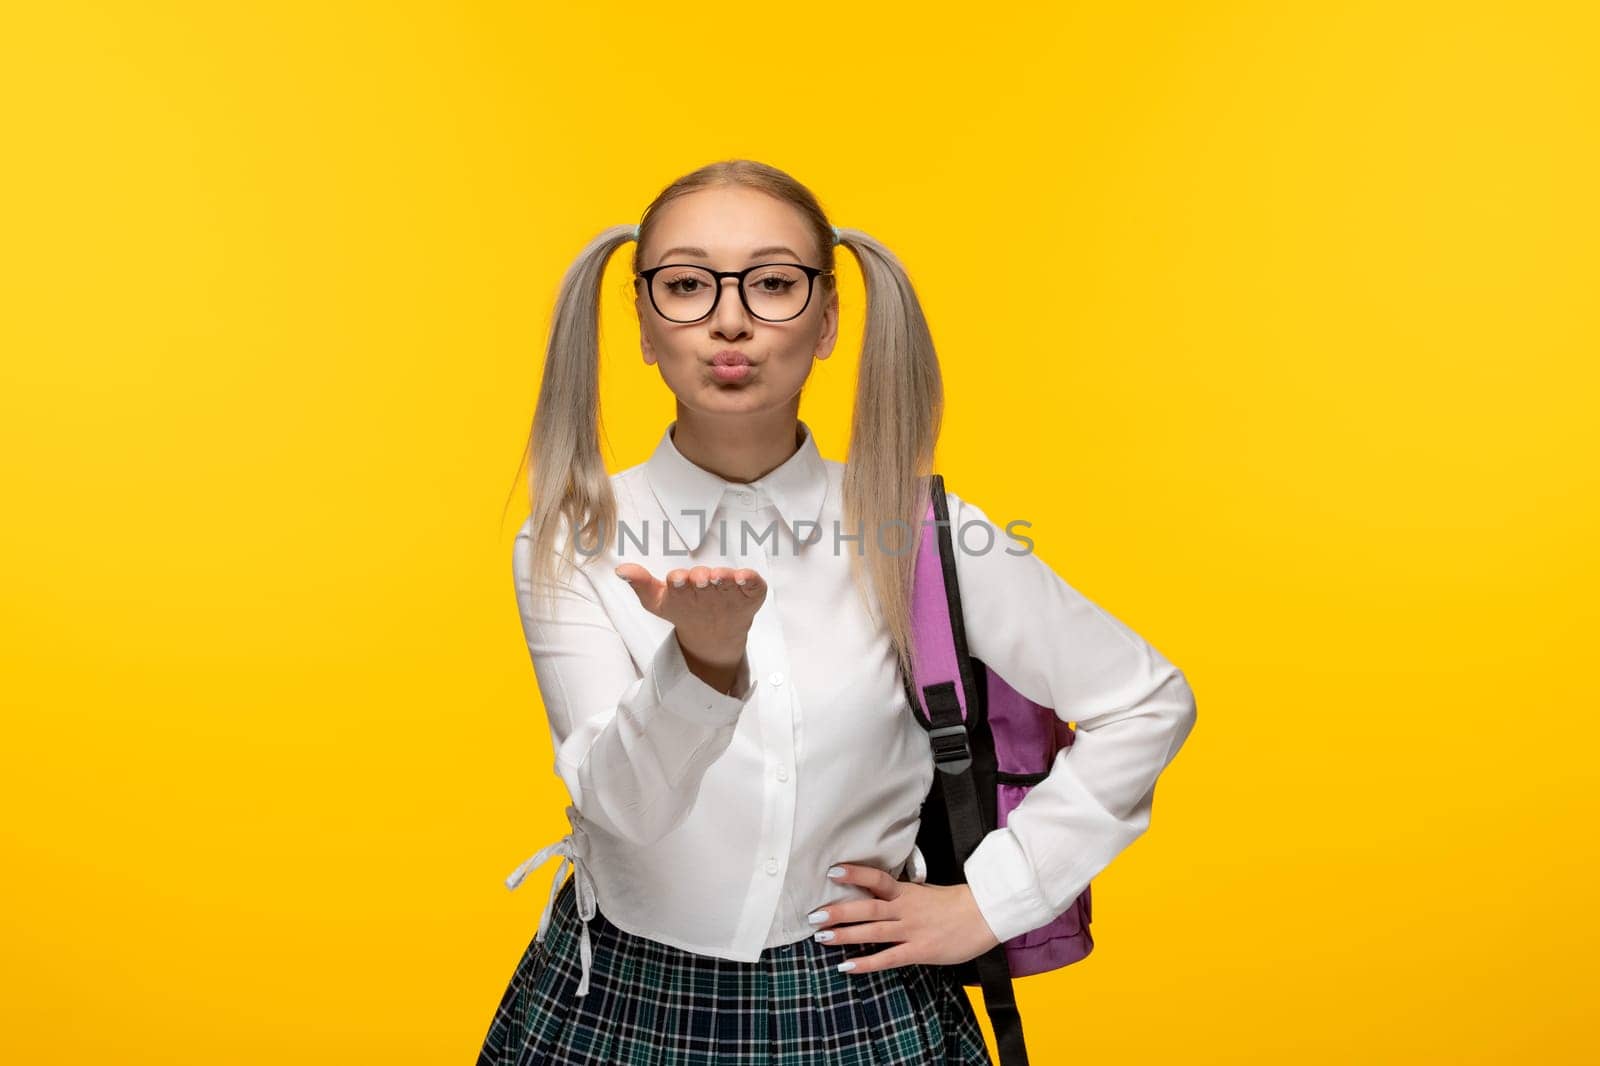 world book day schoolgirl sending cute kiss on yellow background